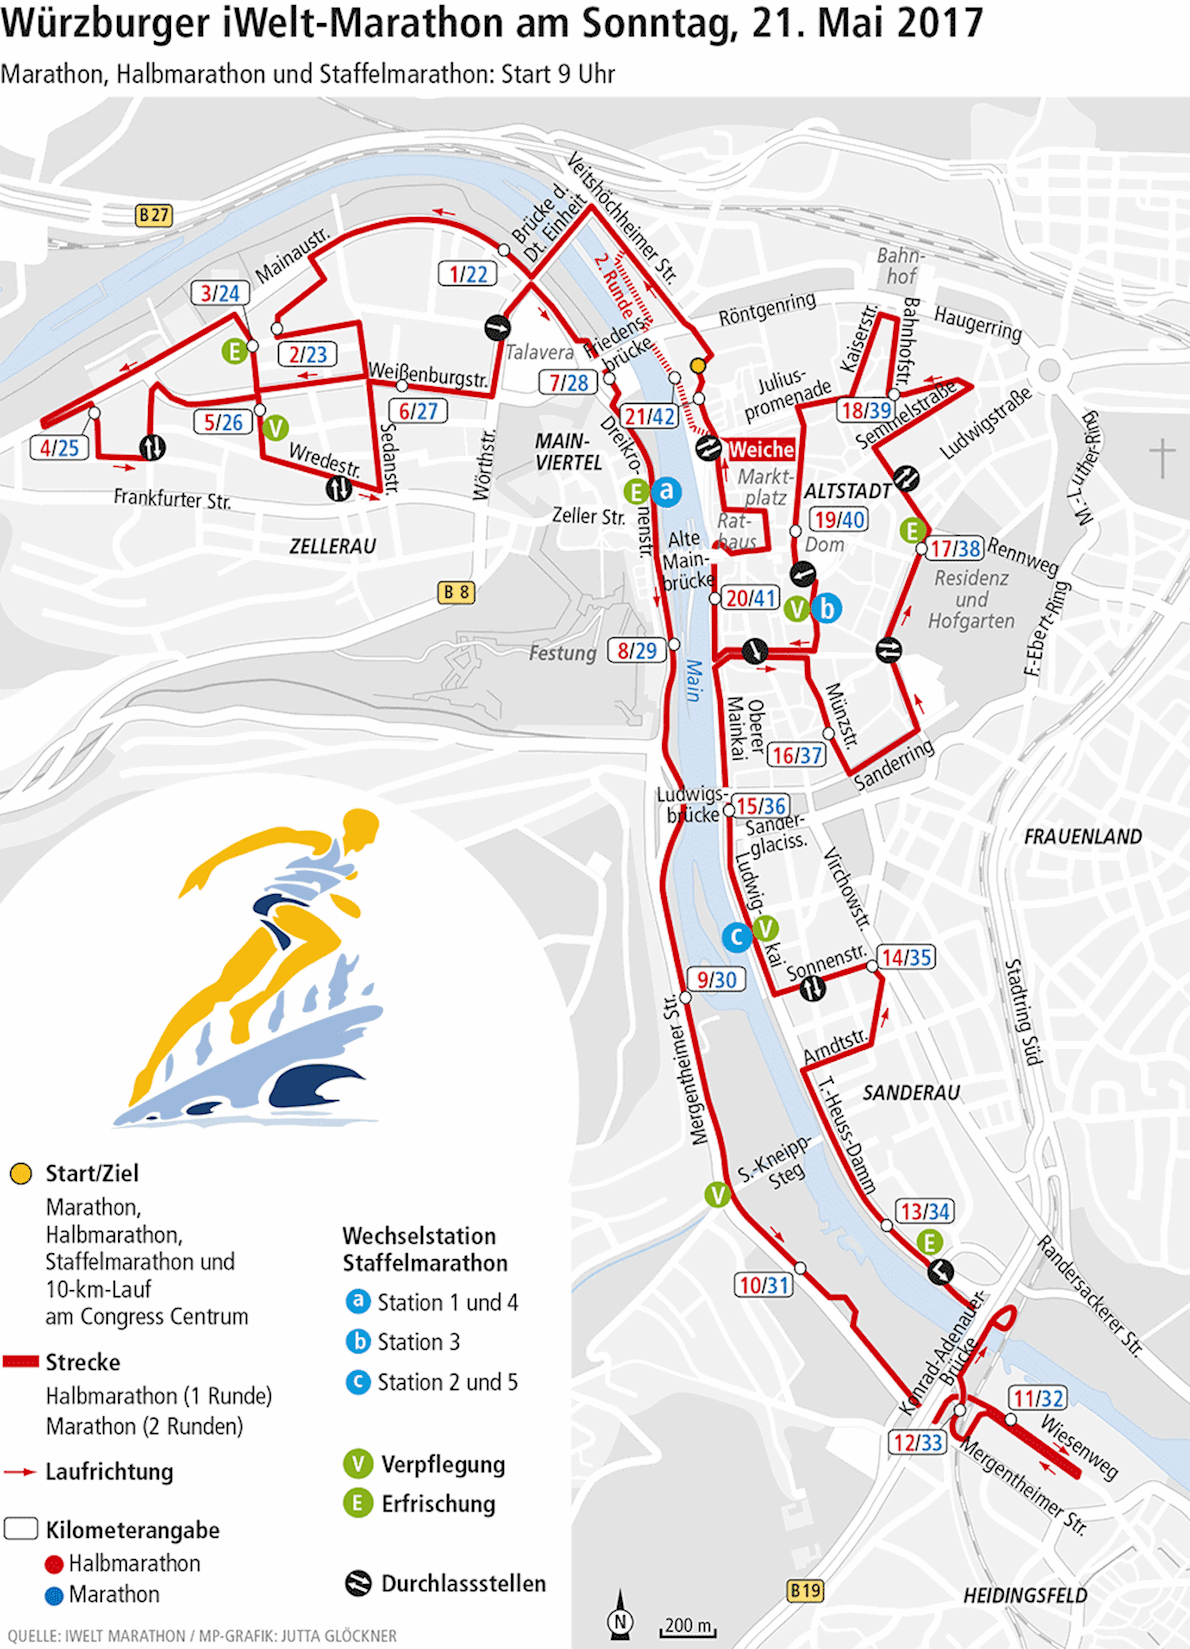 iWelt Marathon Würzburg Route Map